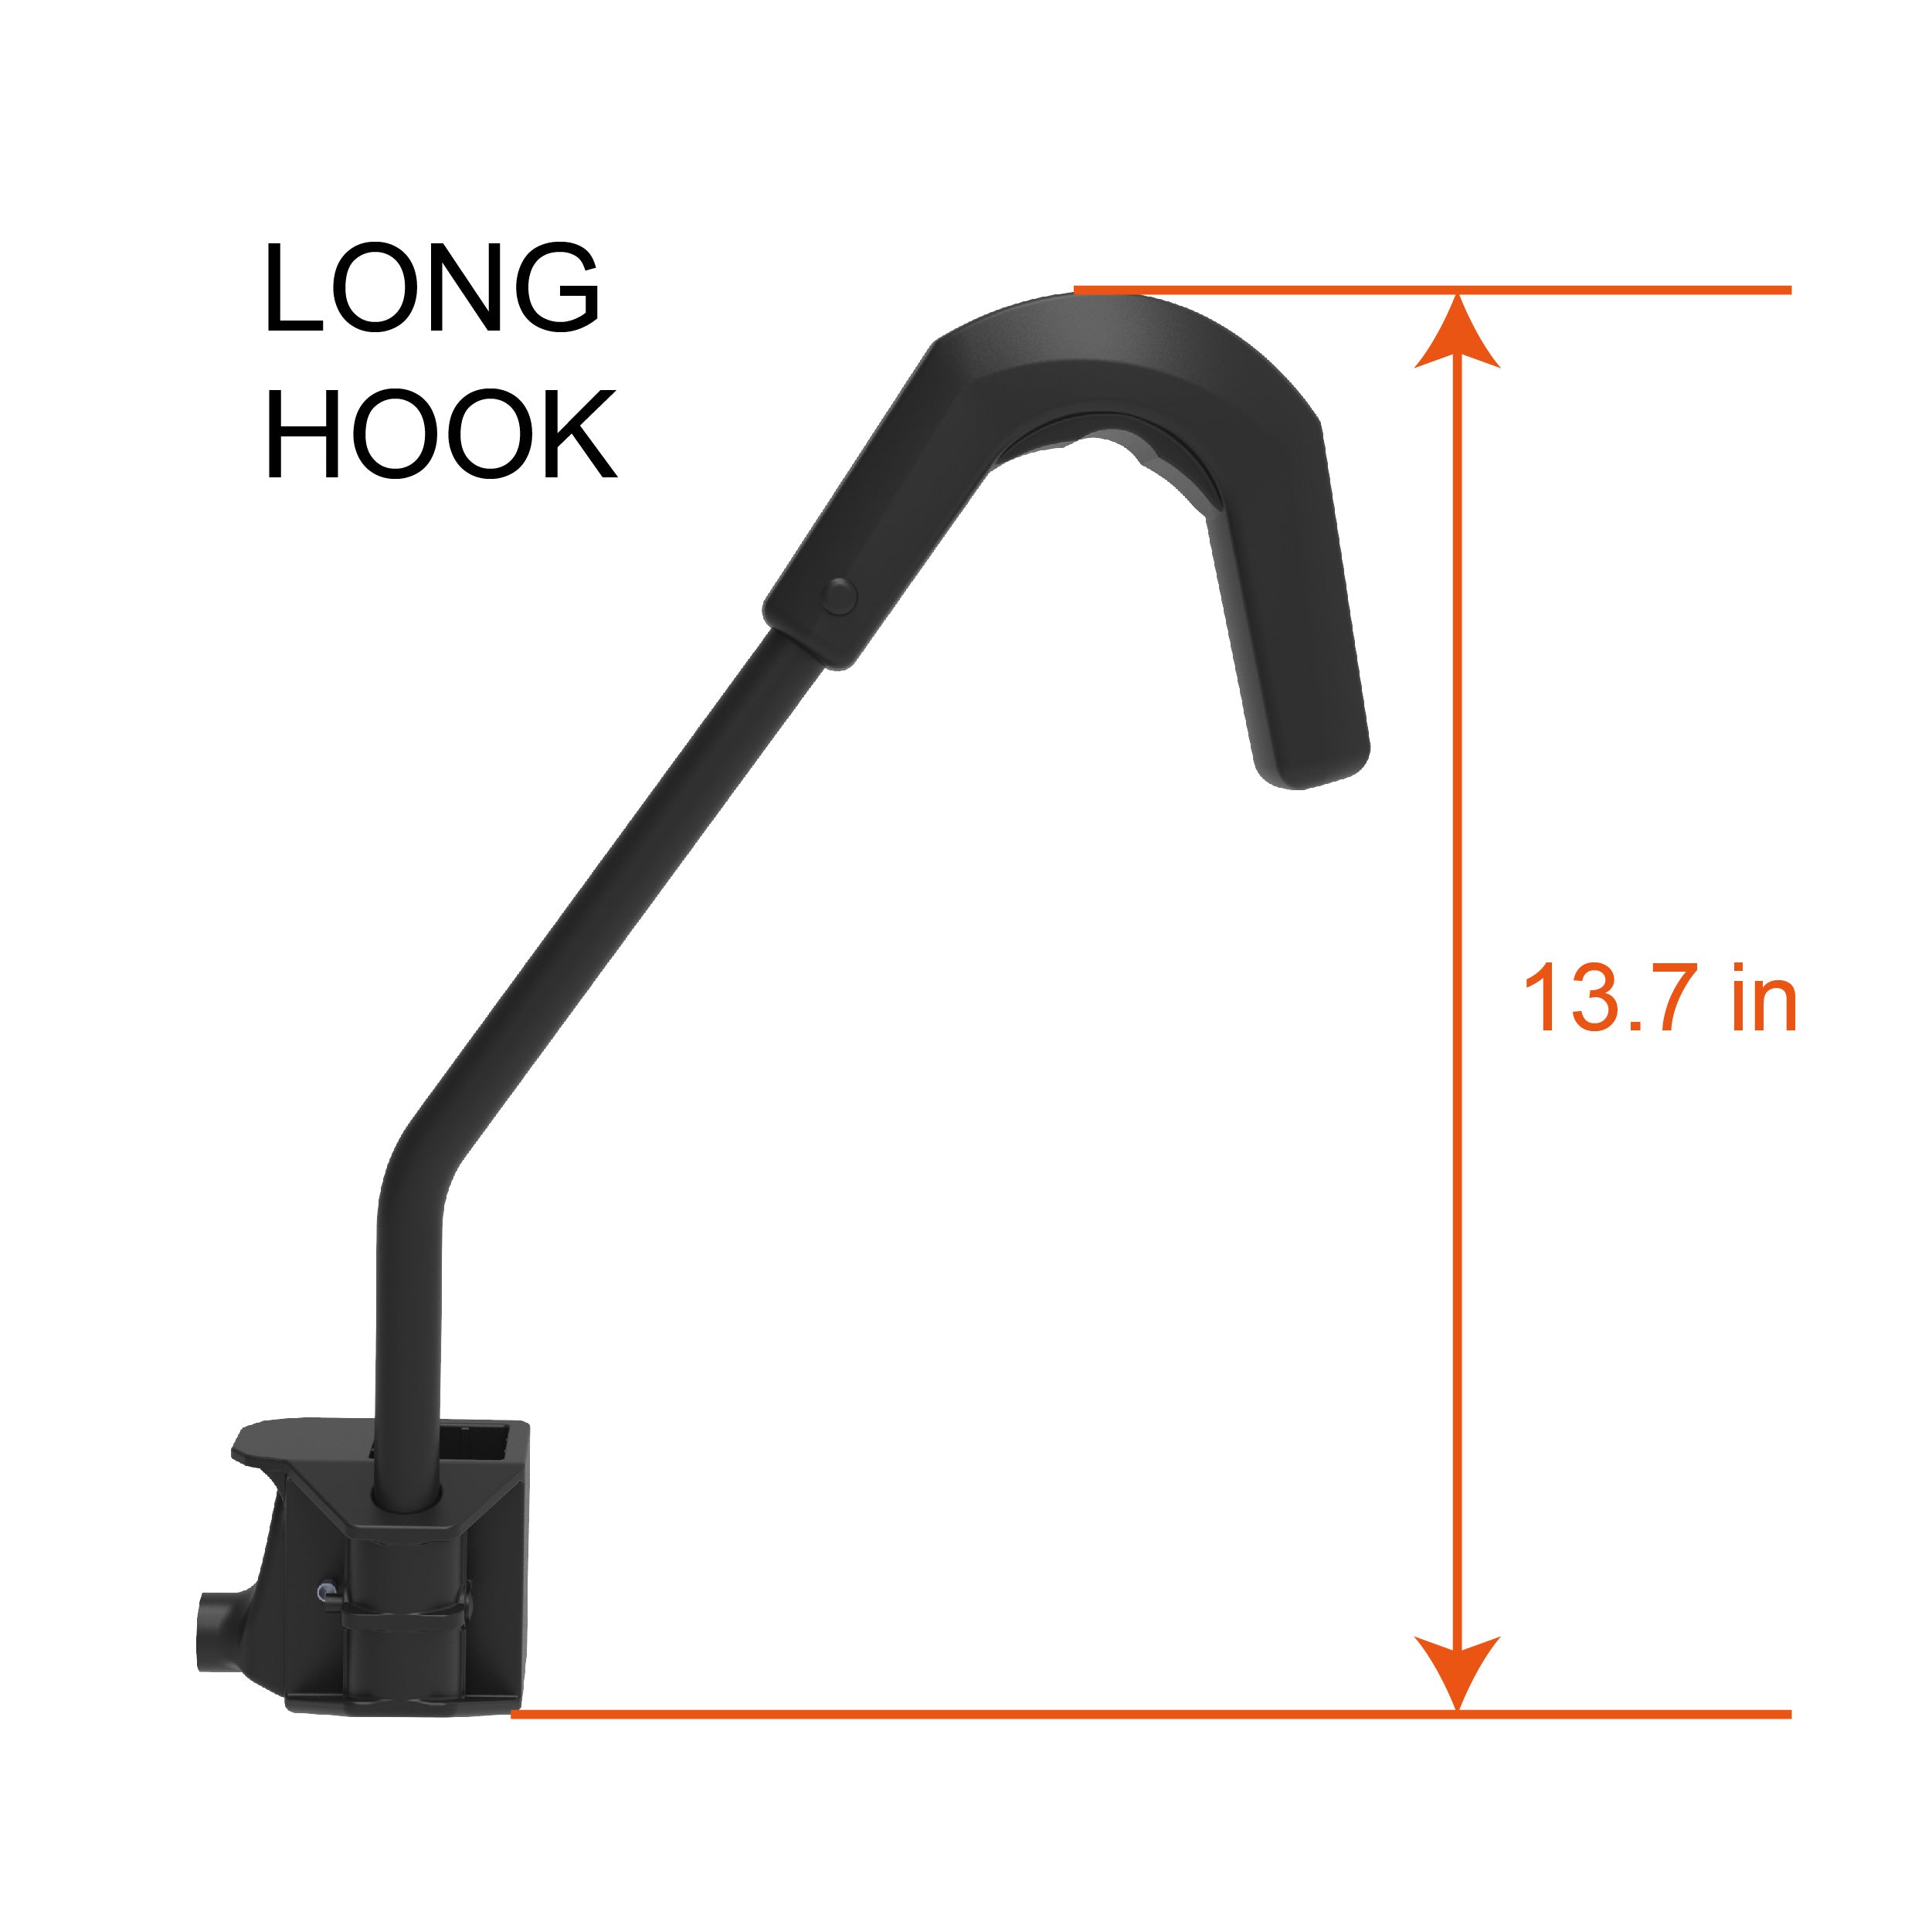 Plastic clamping Hook for VOLT 2 / VOLT RV / BLAST